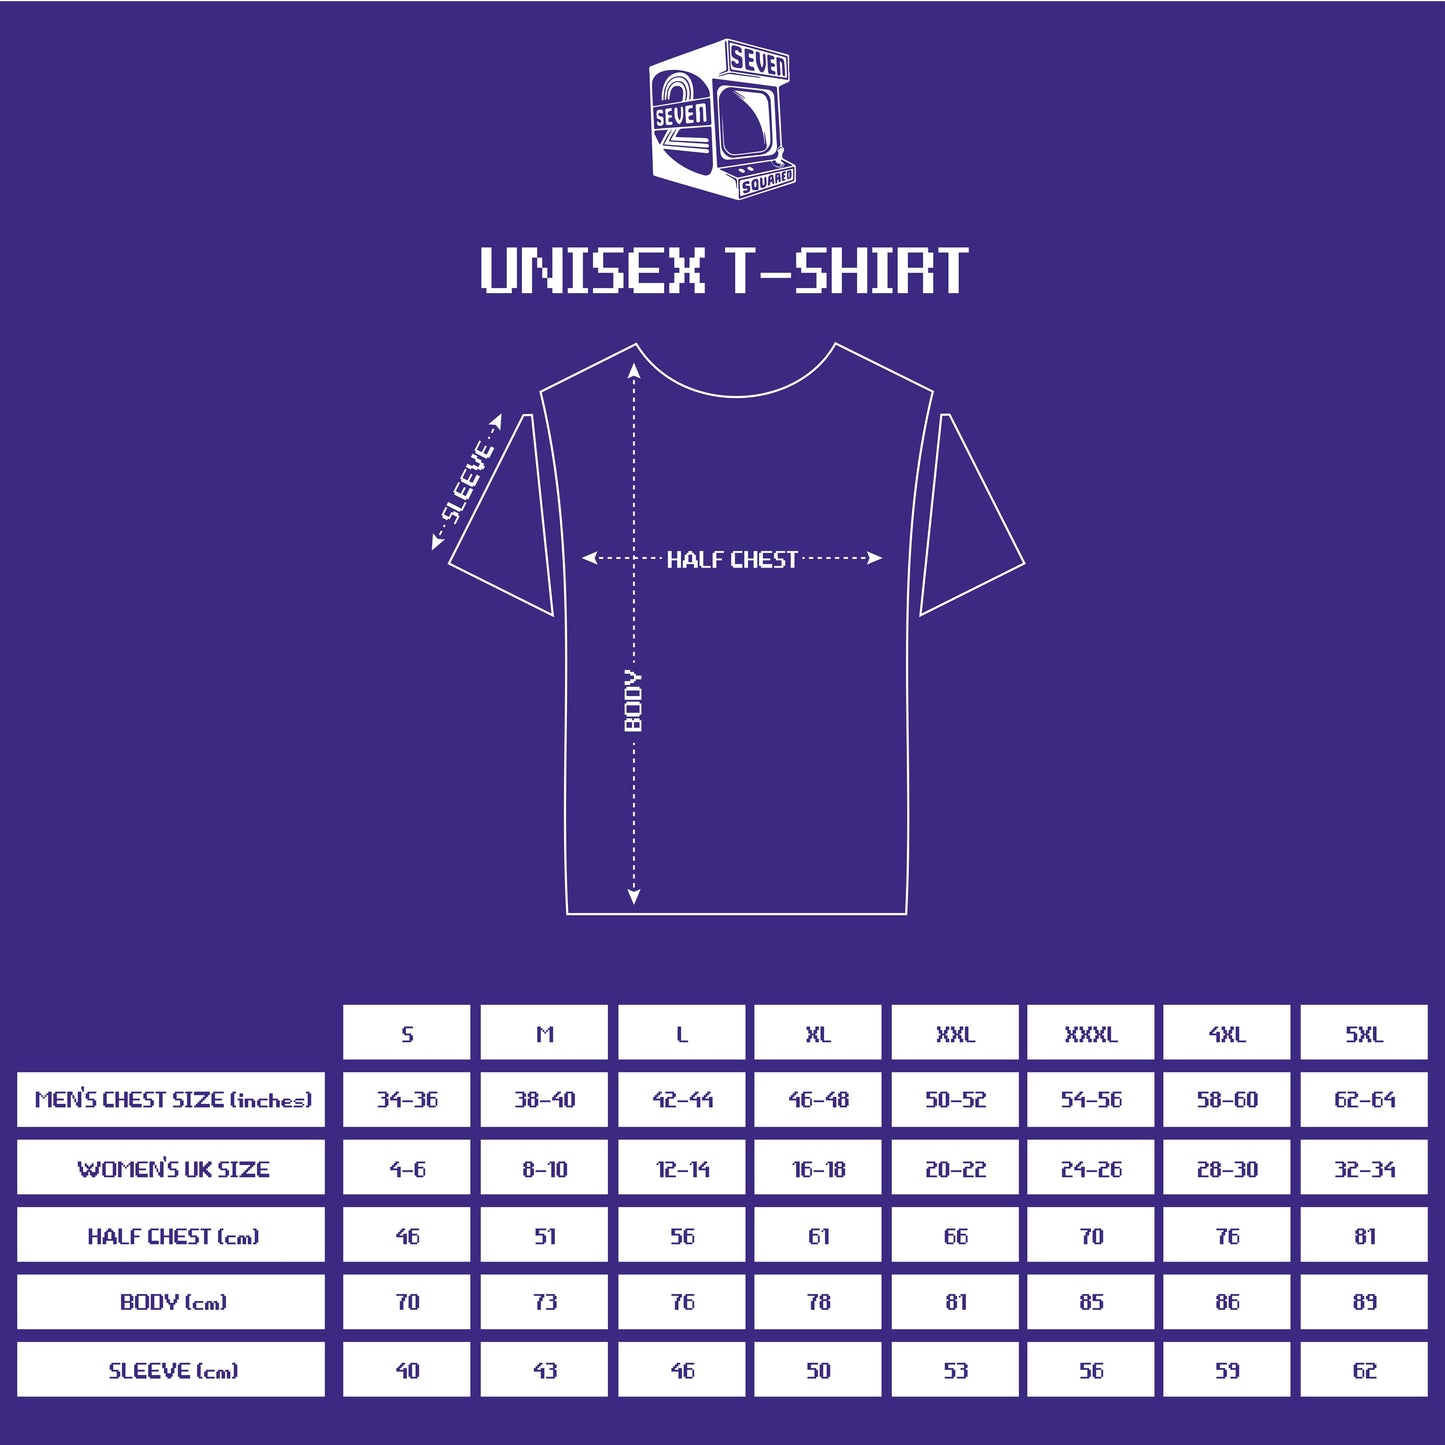 Microprose Pocket Logo Retro Gaming T-Shirt T-Shirt Seven Squared 